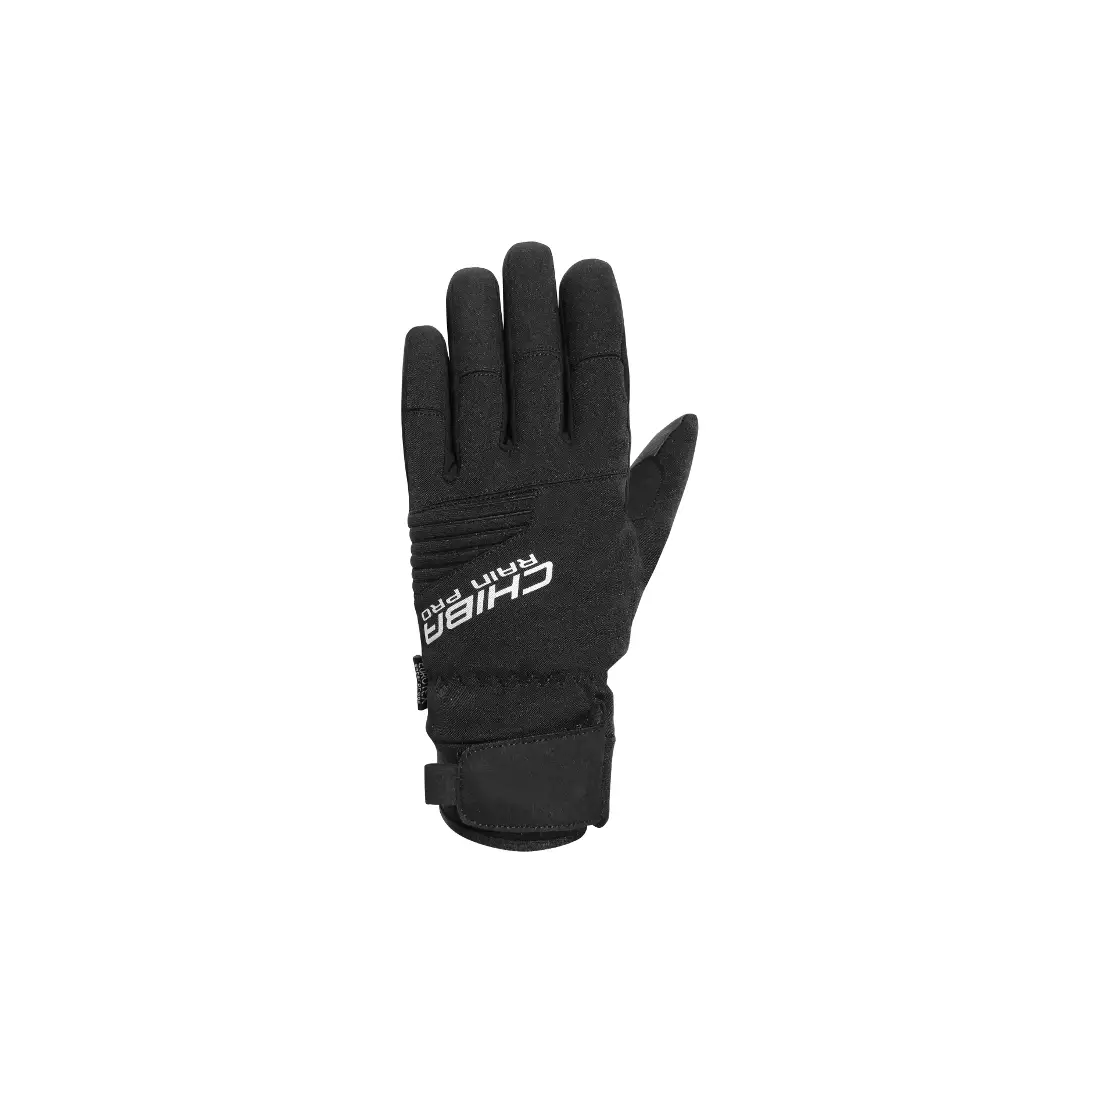 CHIBA RAIN TOUCH zimné cyklistické rukavice, čierne 3120018